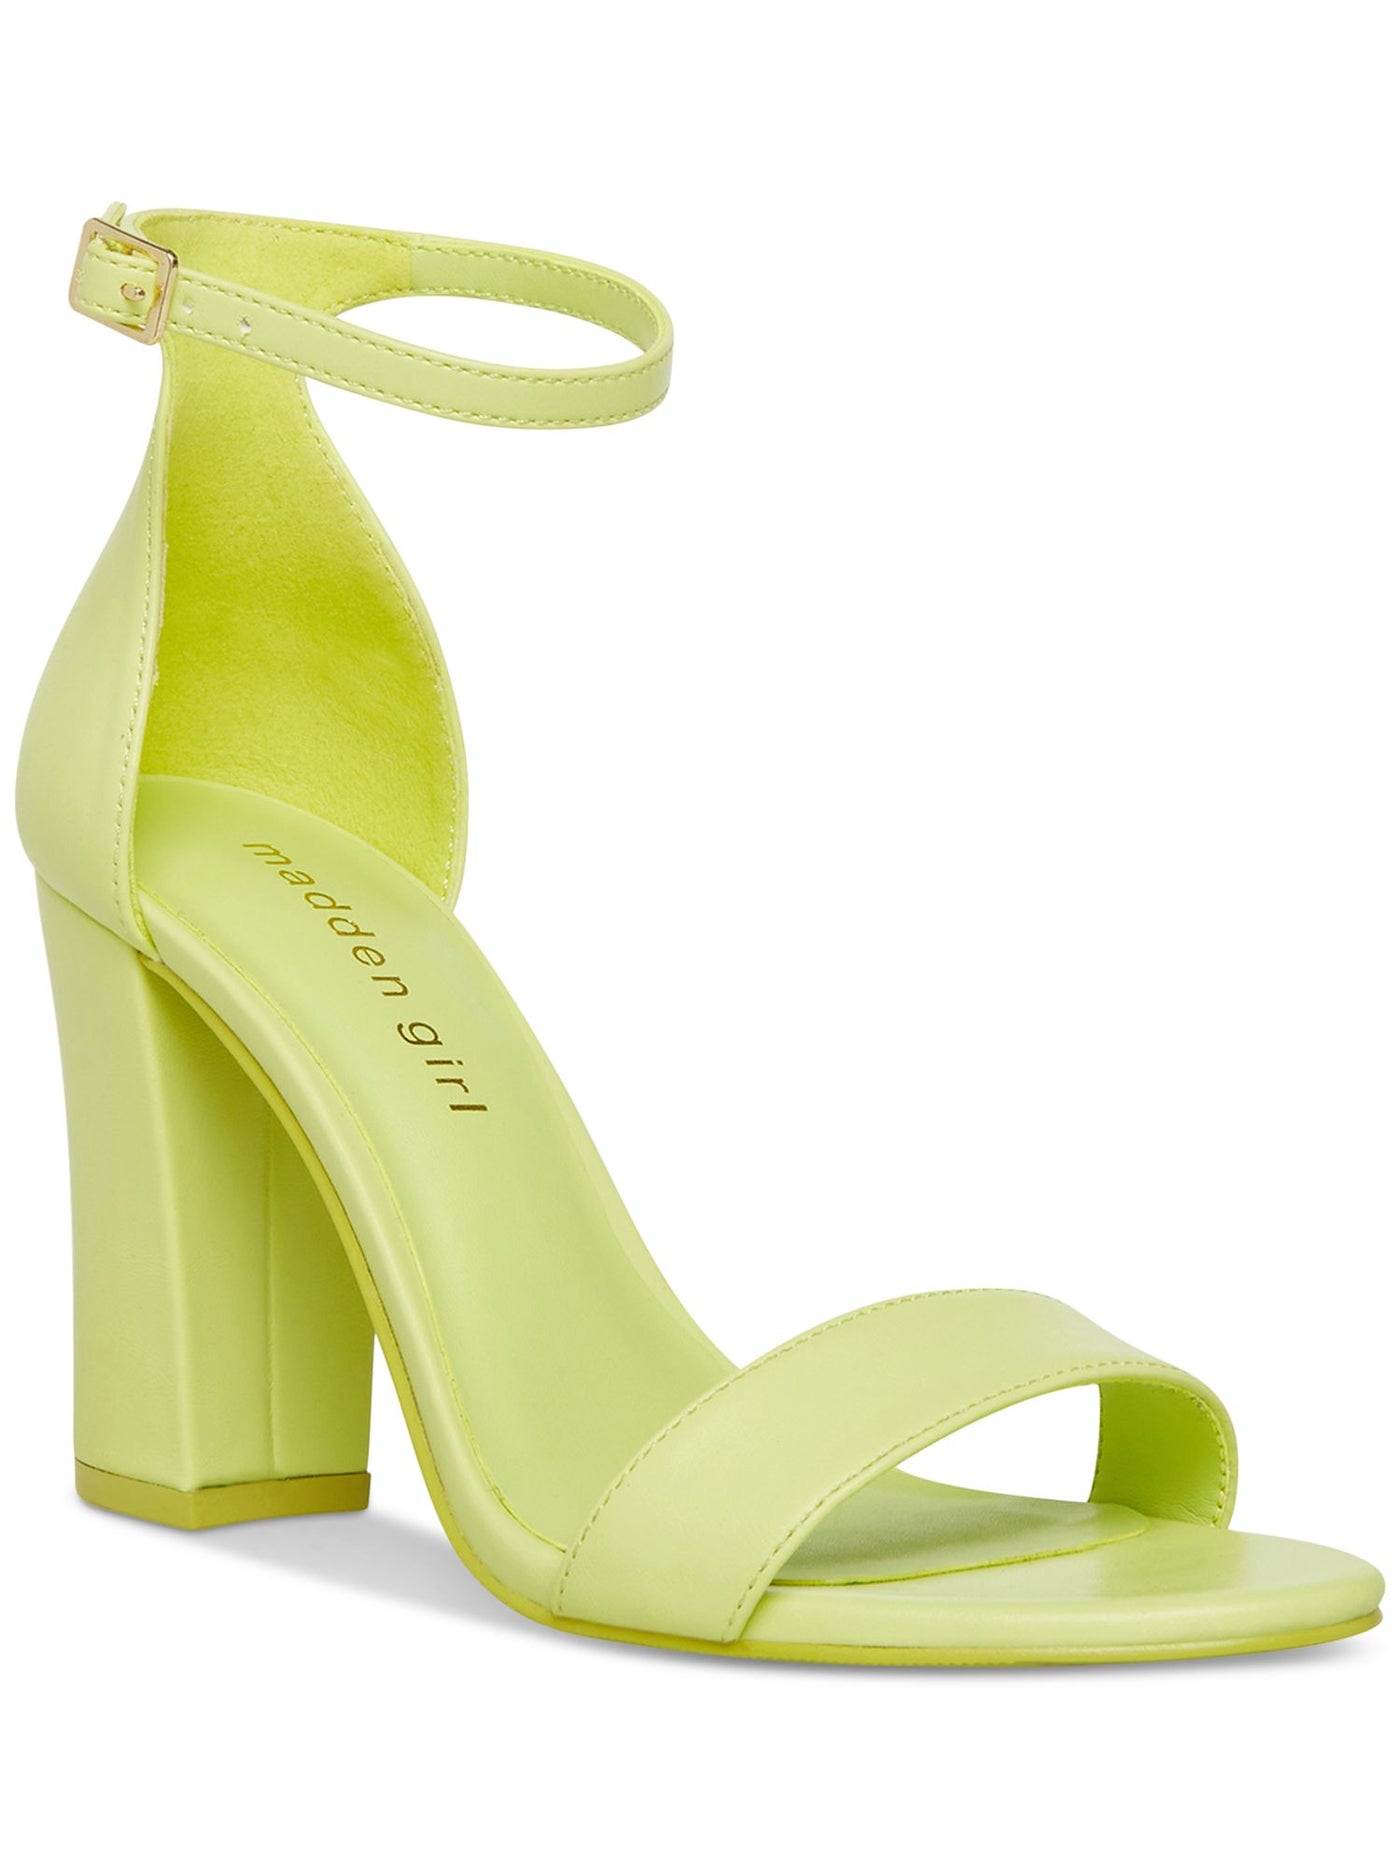 MADDEN GIRL Womens Green Padded Adjustable Ankle Strap Beella Round Toe Block Heel Buckle Dress Heeled Sandal 9.5 M